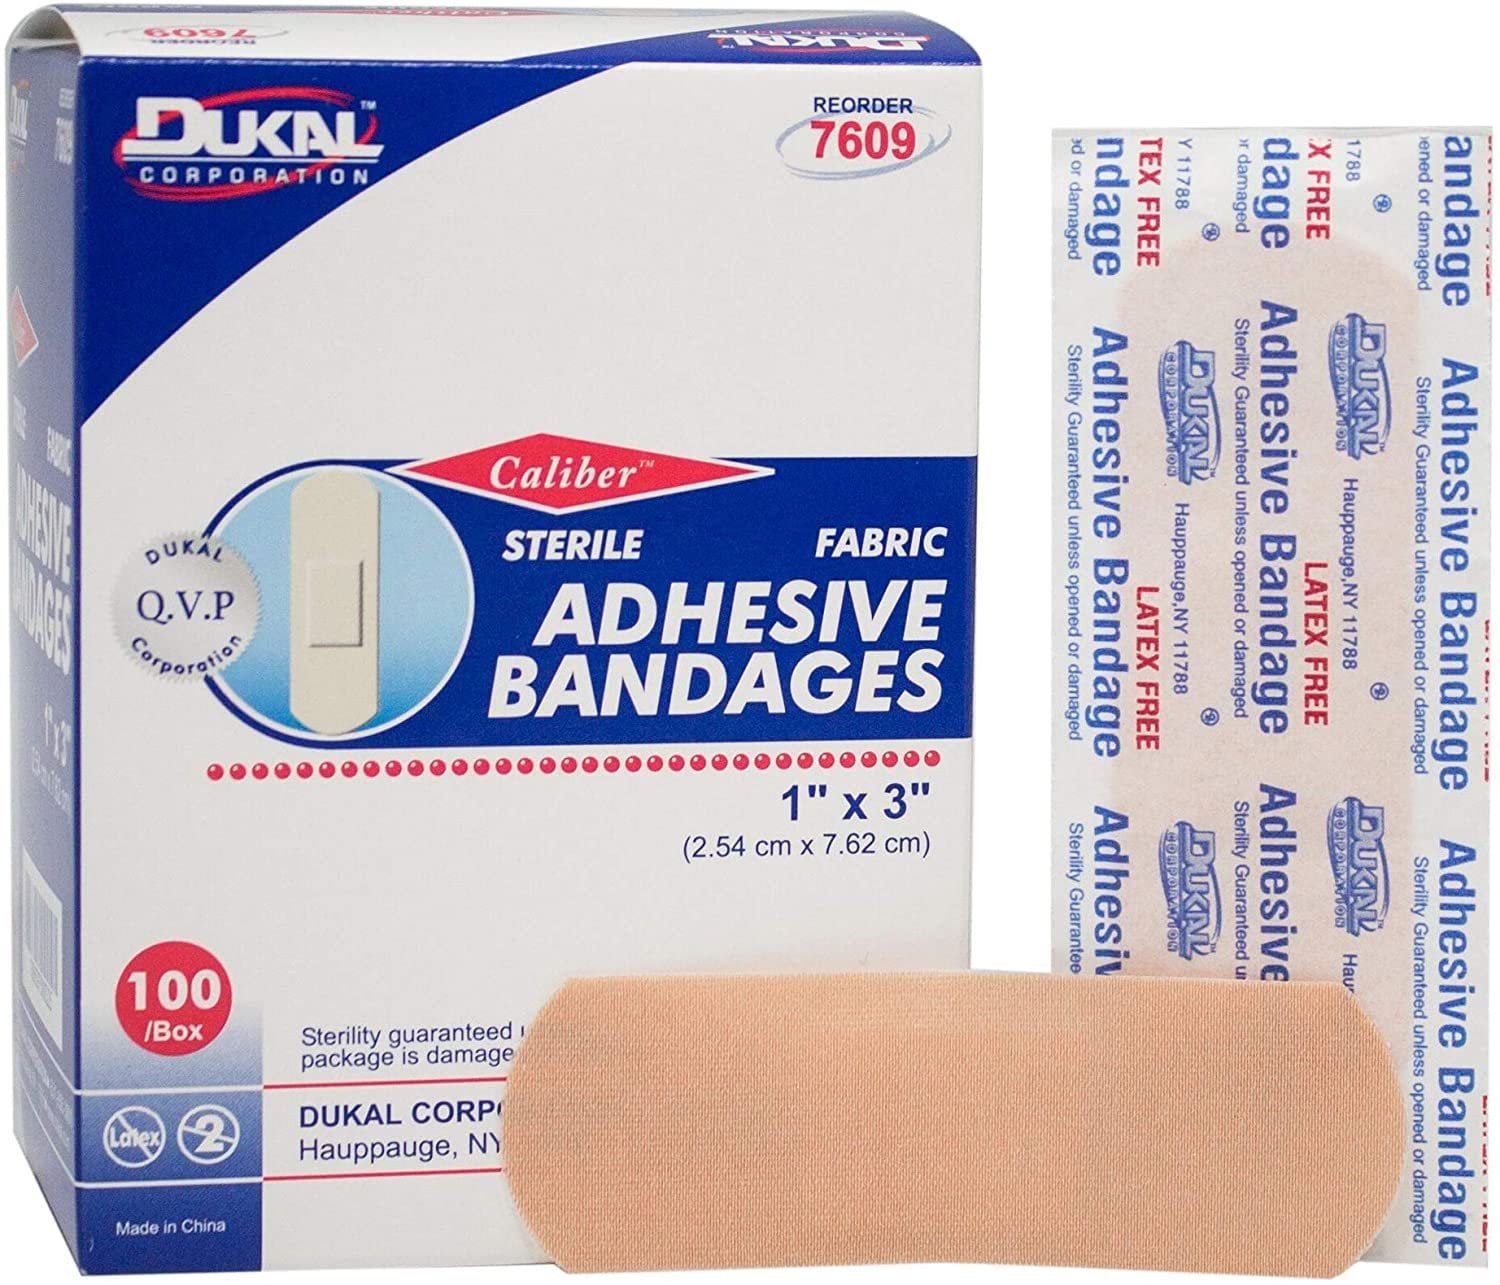 Non adhesive bandage